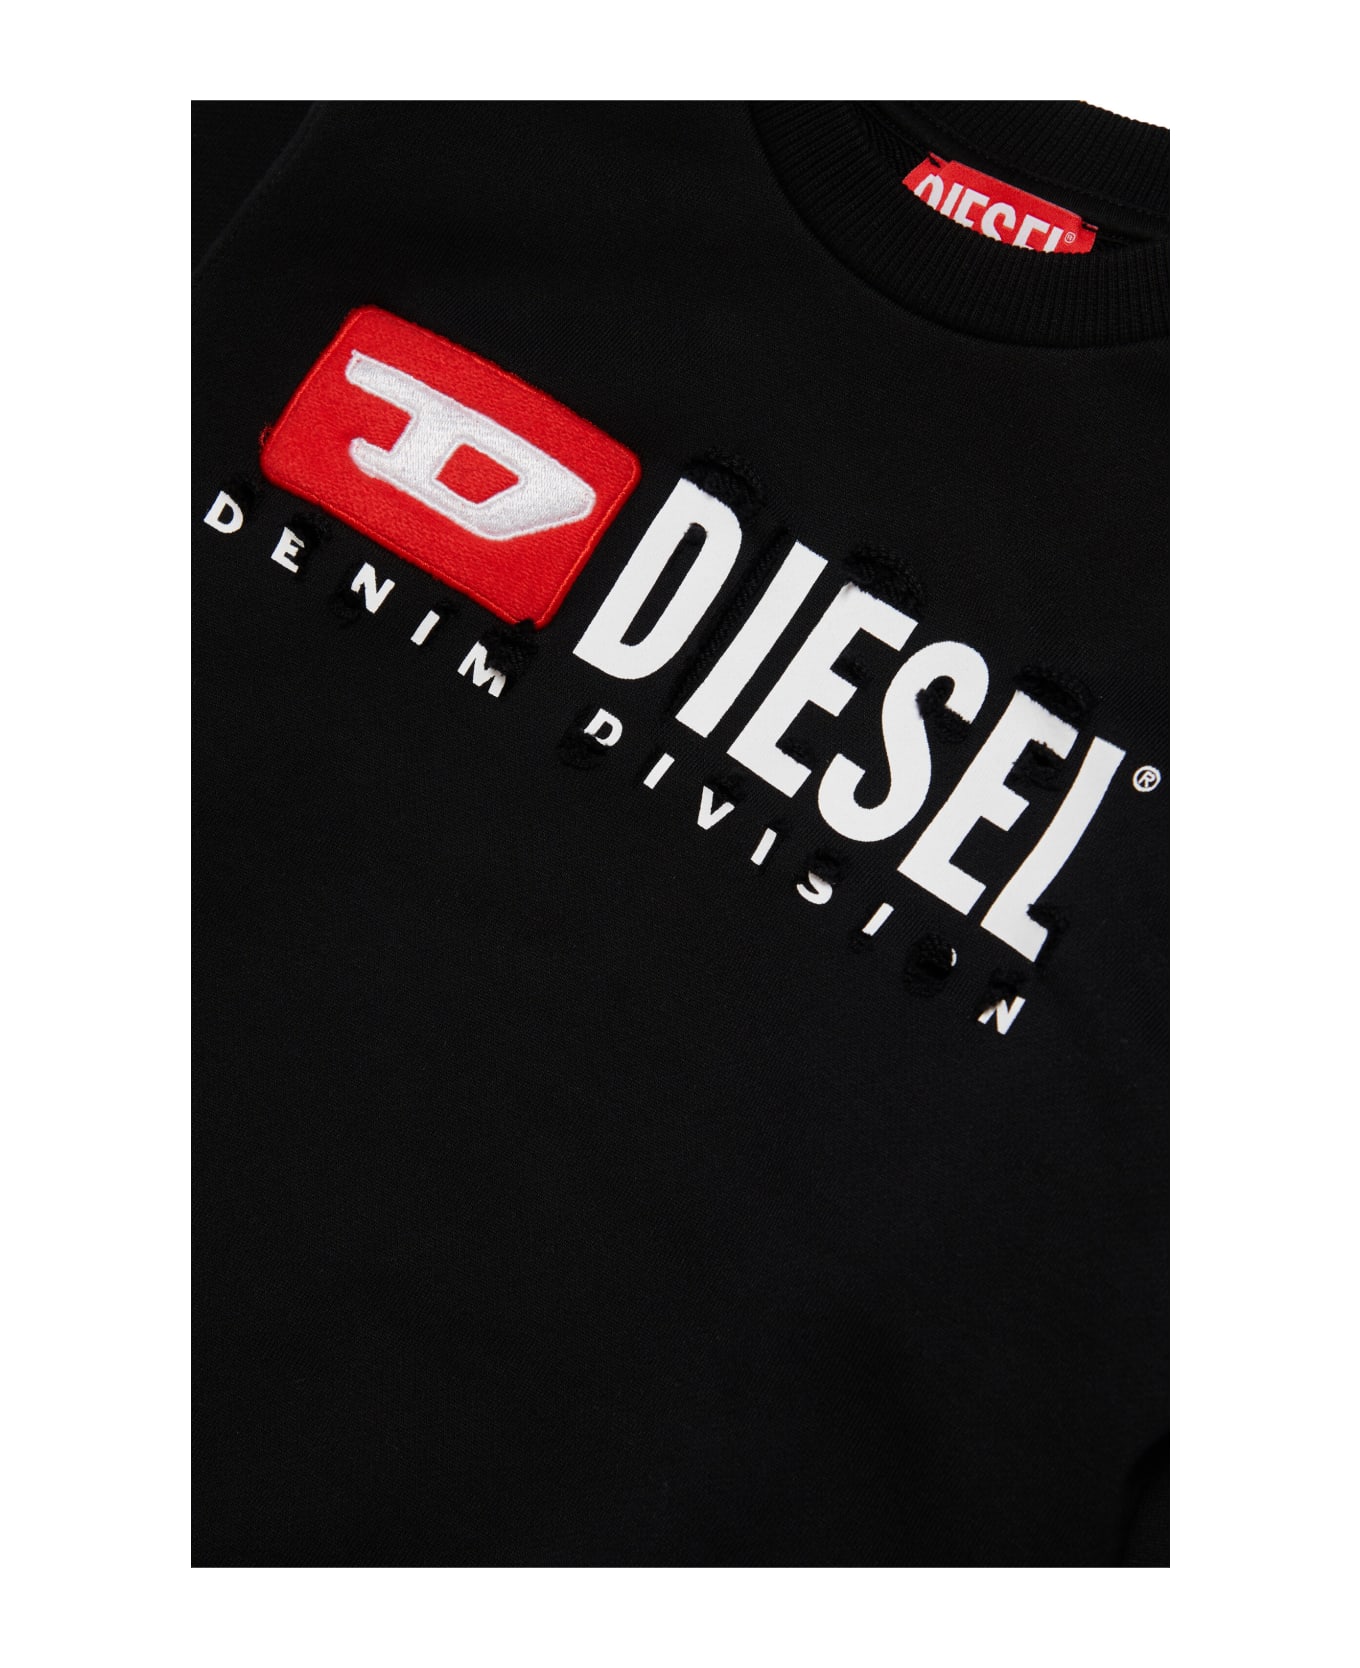 Diesel Smacsdivstroyed Sweat-shirt Diesel Crew-neck Sweatshirt With Logo Breaks - Black